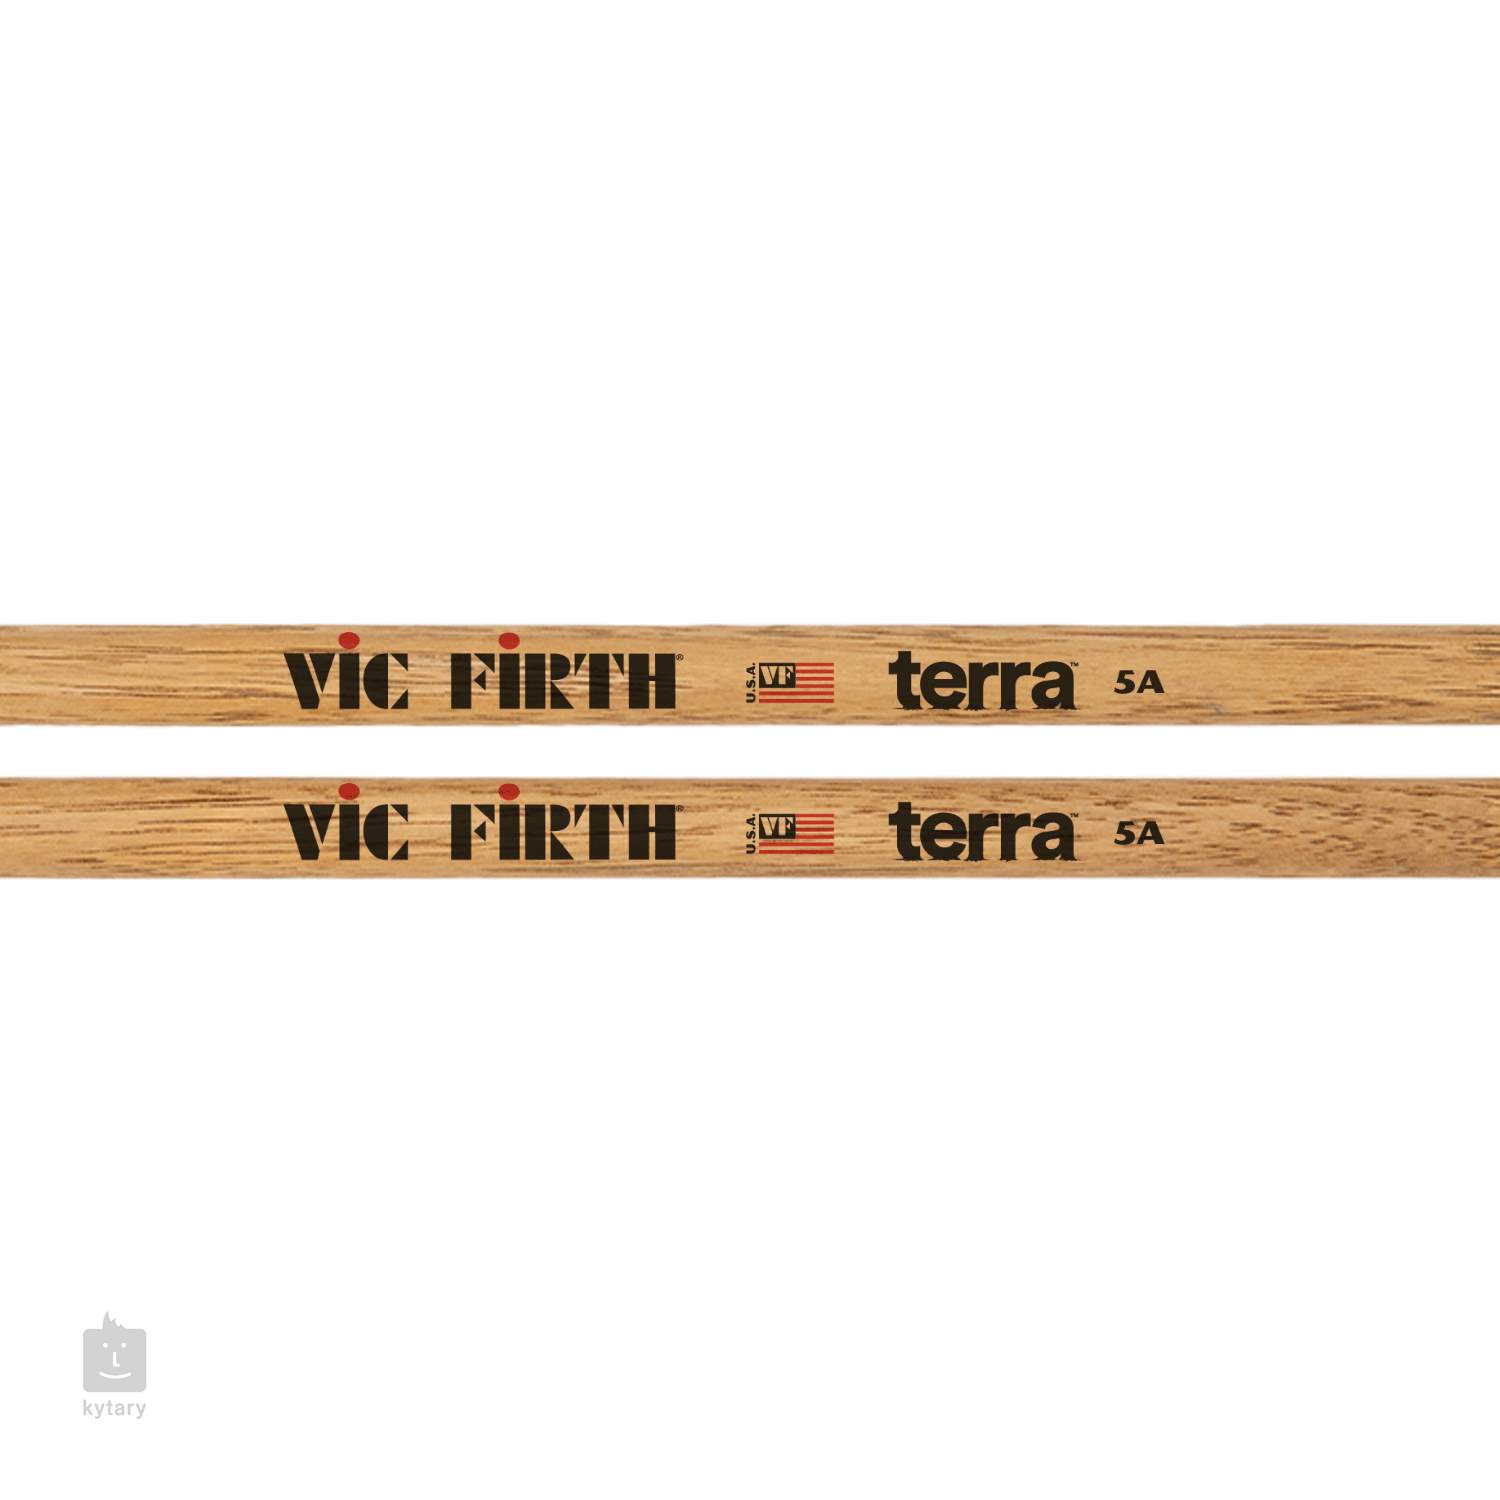 https://img.kytary.com/eshop_de/velky_v2/na/638258725202230000/5e52fb2f/65124099/vic-firth-5at-american-classic-terra-series-drumsticks-wood-tip.jpg